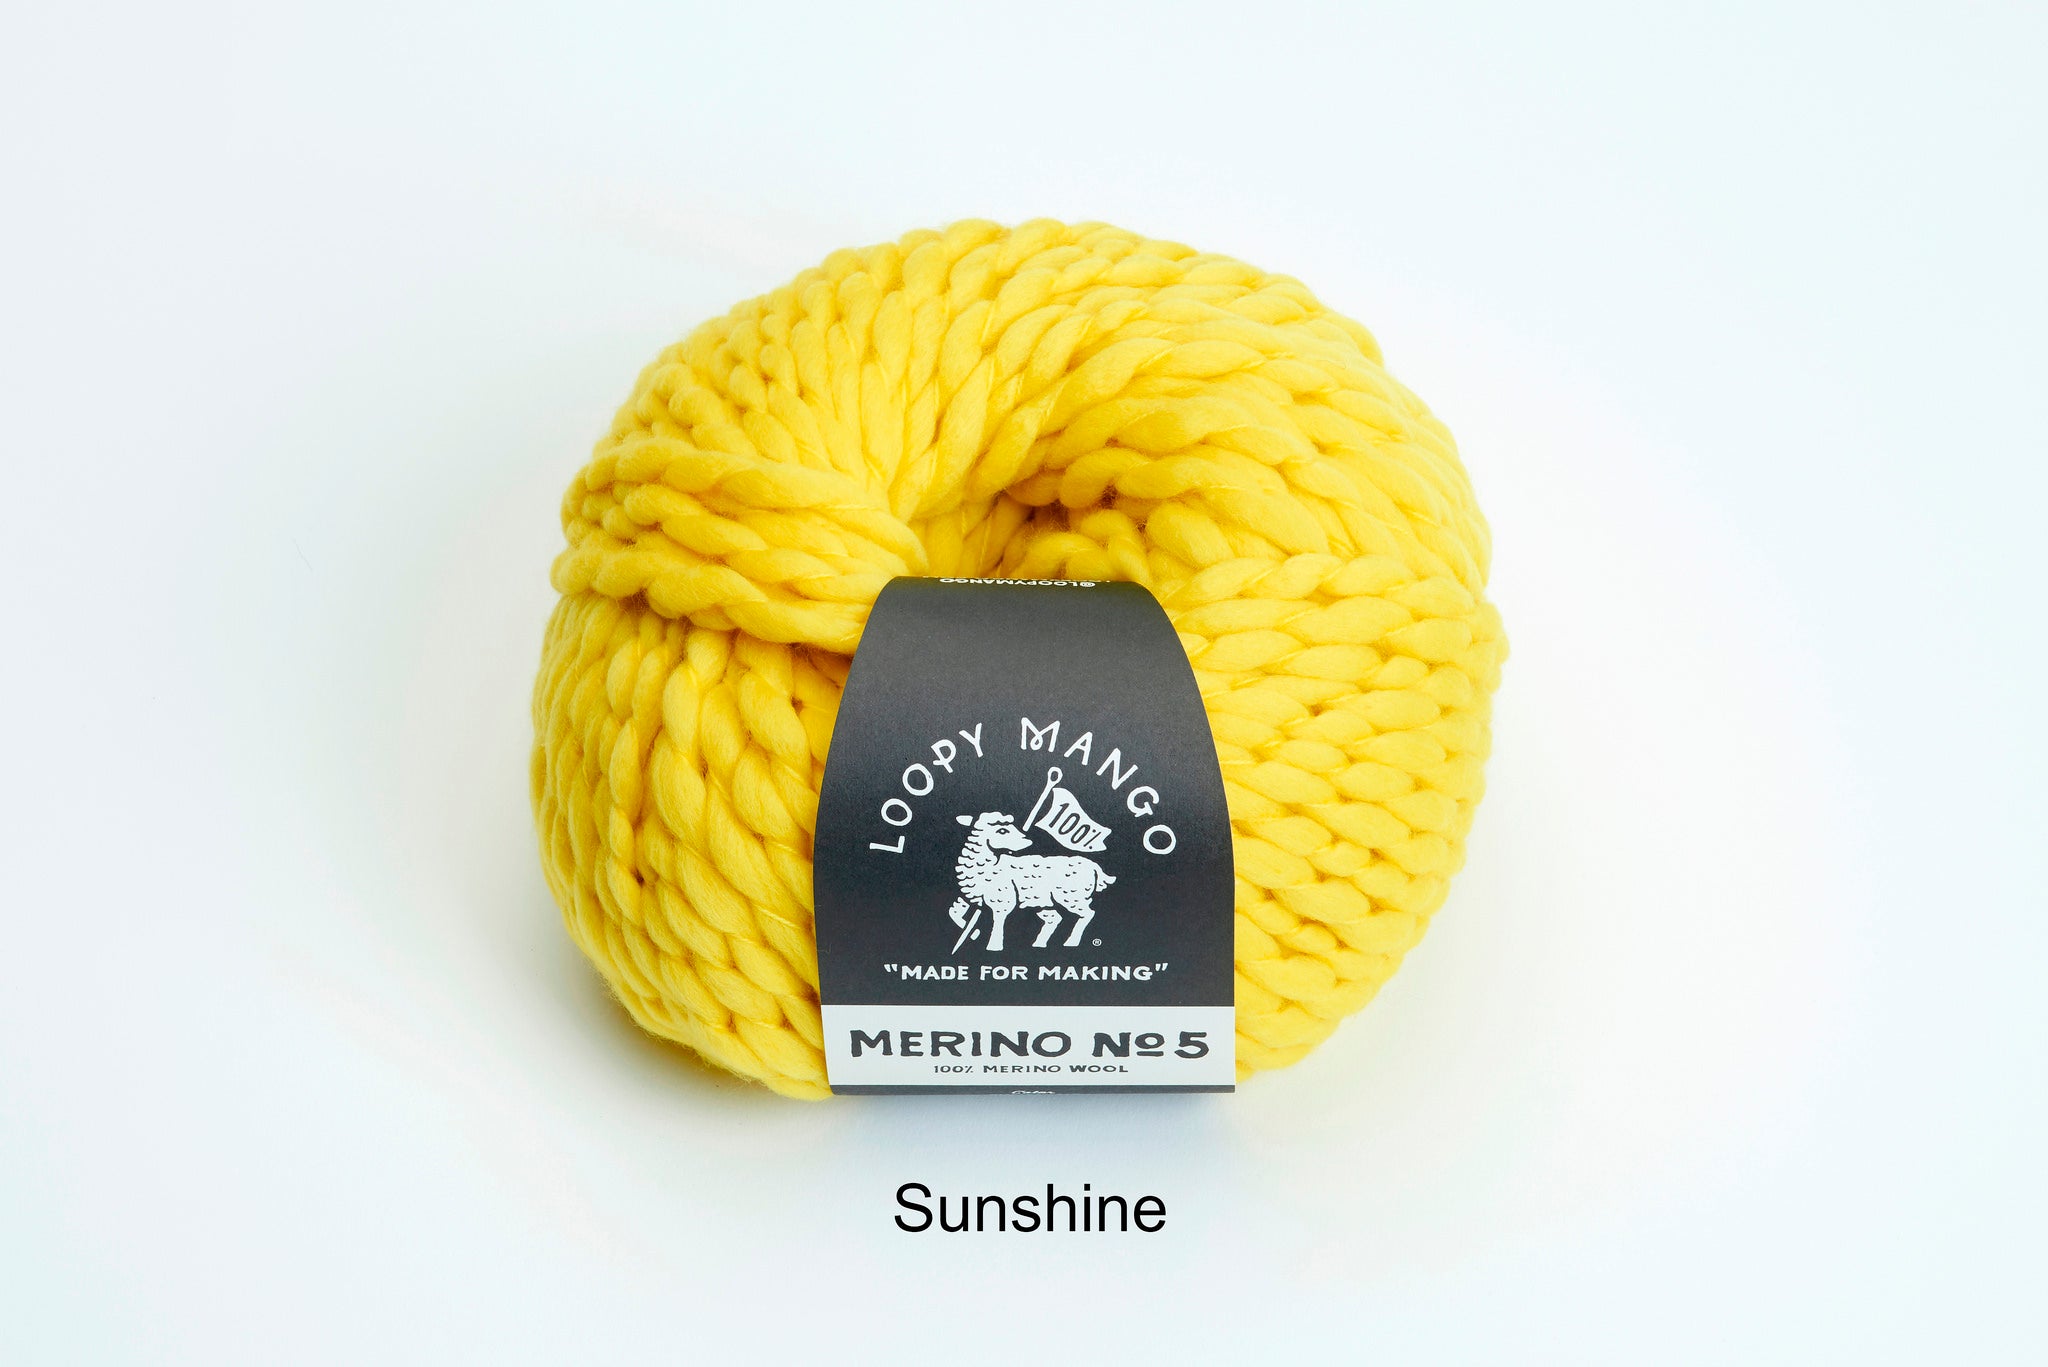 Extra Soft Merino Wool Yarn  Dream (Merino Worsted) – Loopy Mango